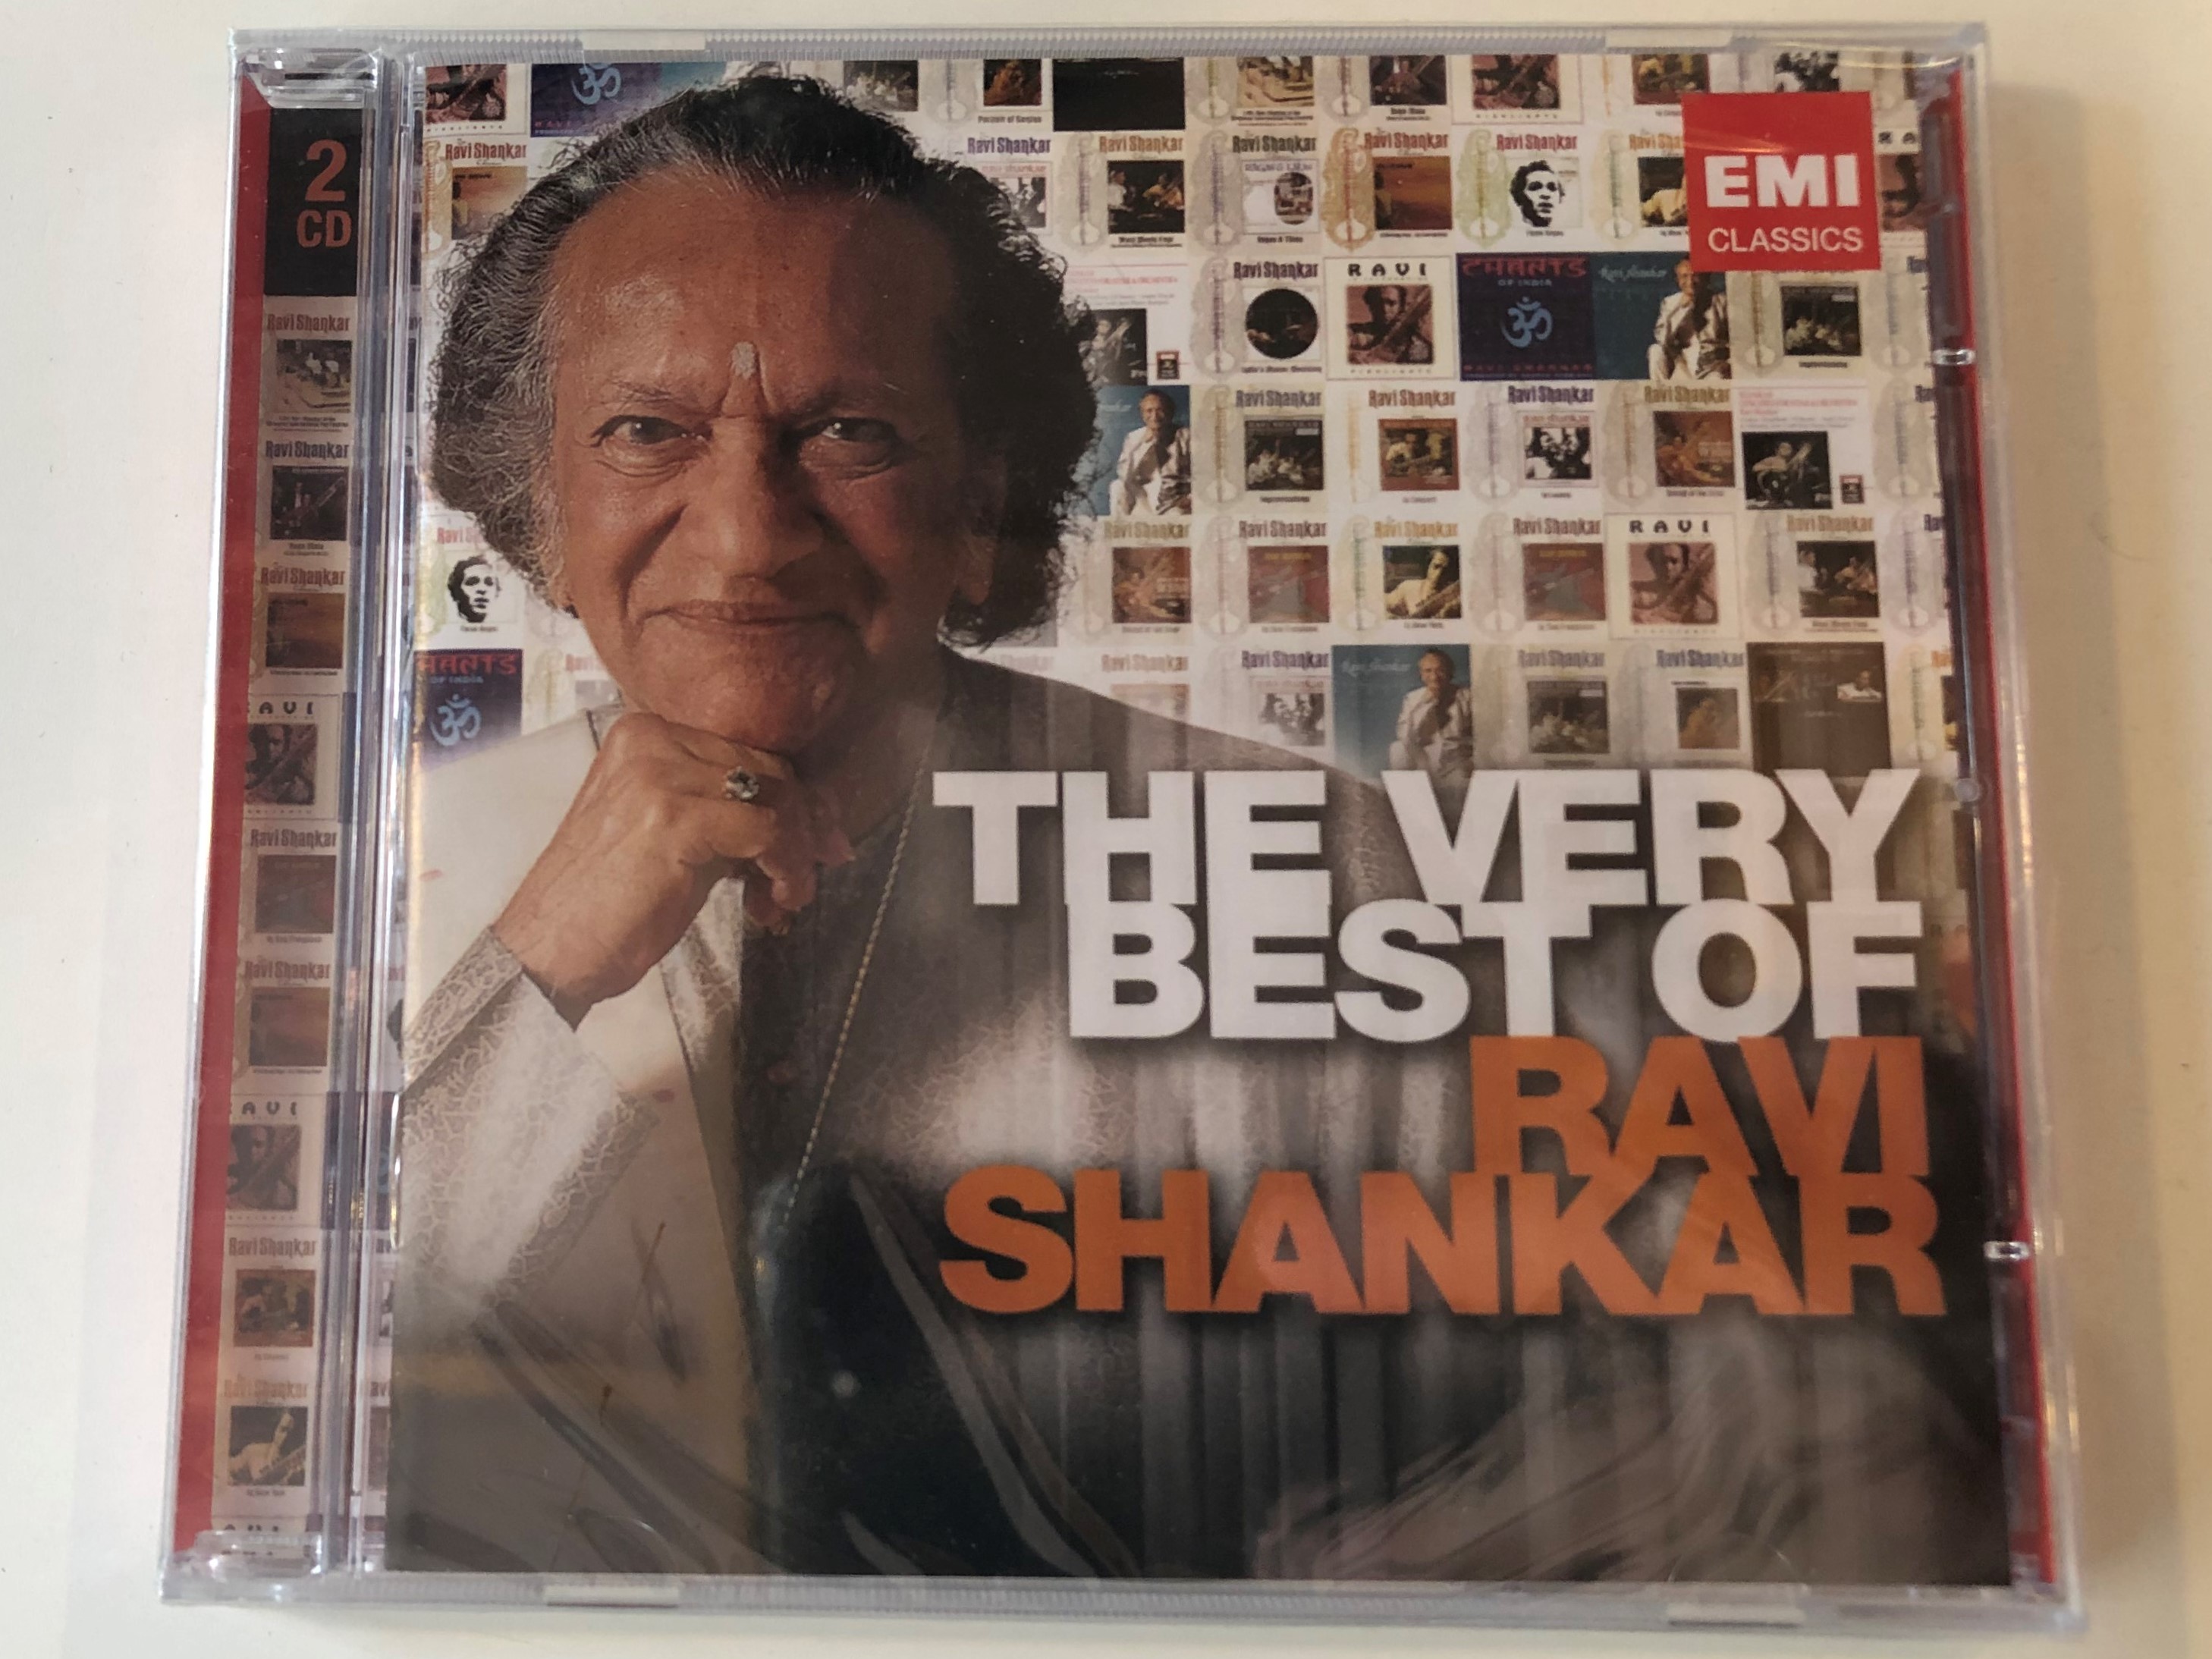 the-very-best-of-ravi-shankar-emi-classics-audio-cd-2017-50999-6-21735-2-0-1-.jpg